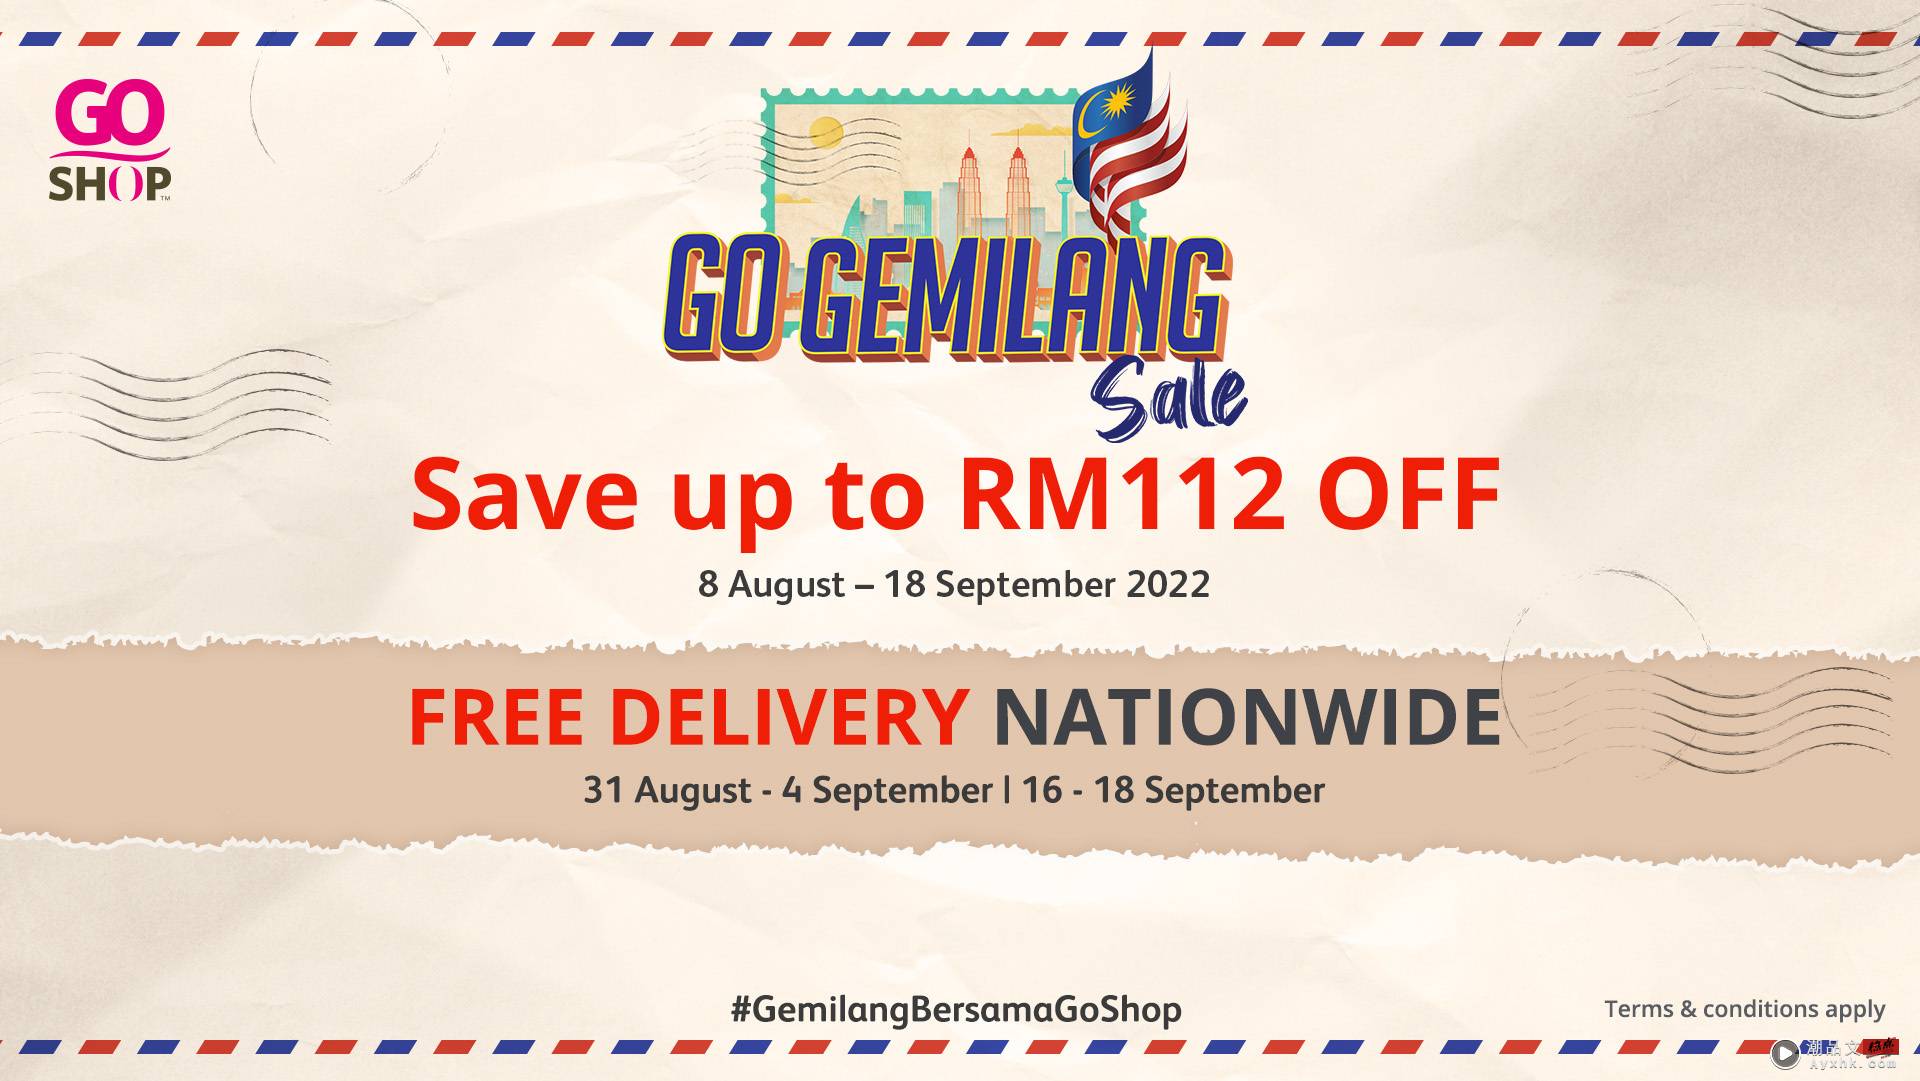 News I 全国免运费！A站 Go Shop推出国庆促销活动“Go Gemilang Sale” 更多热点 图2张